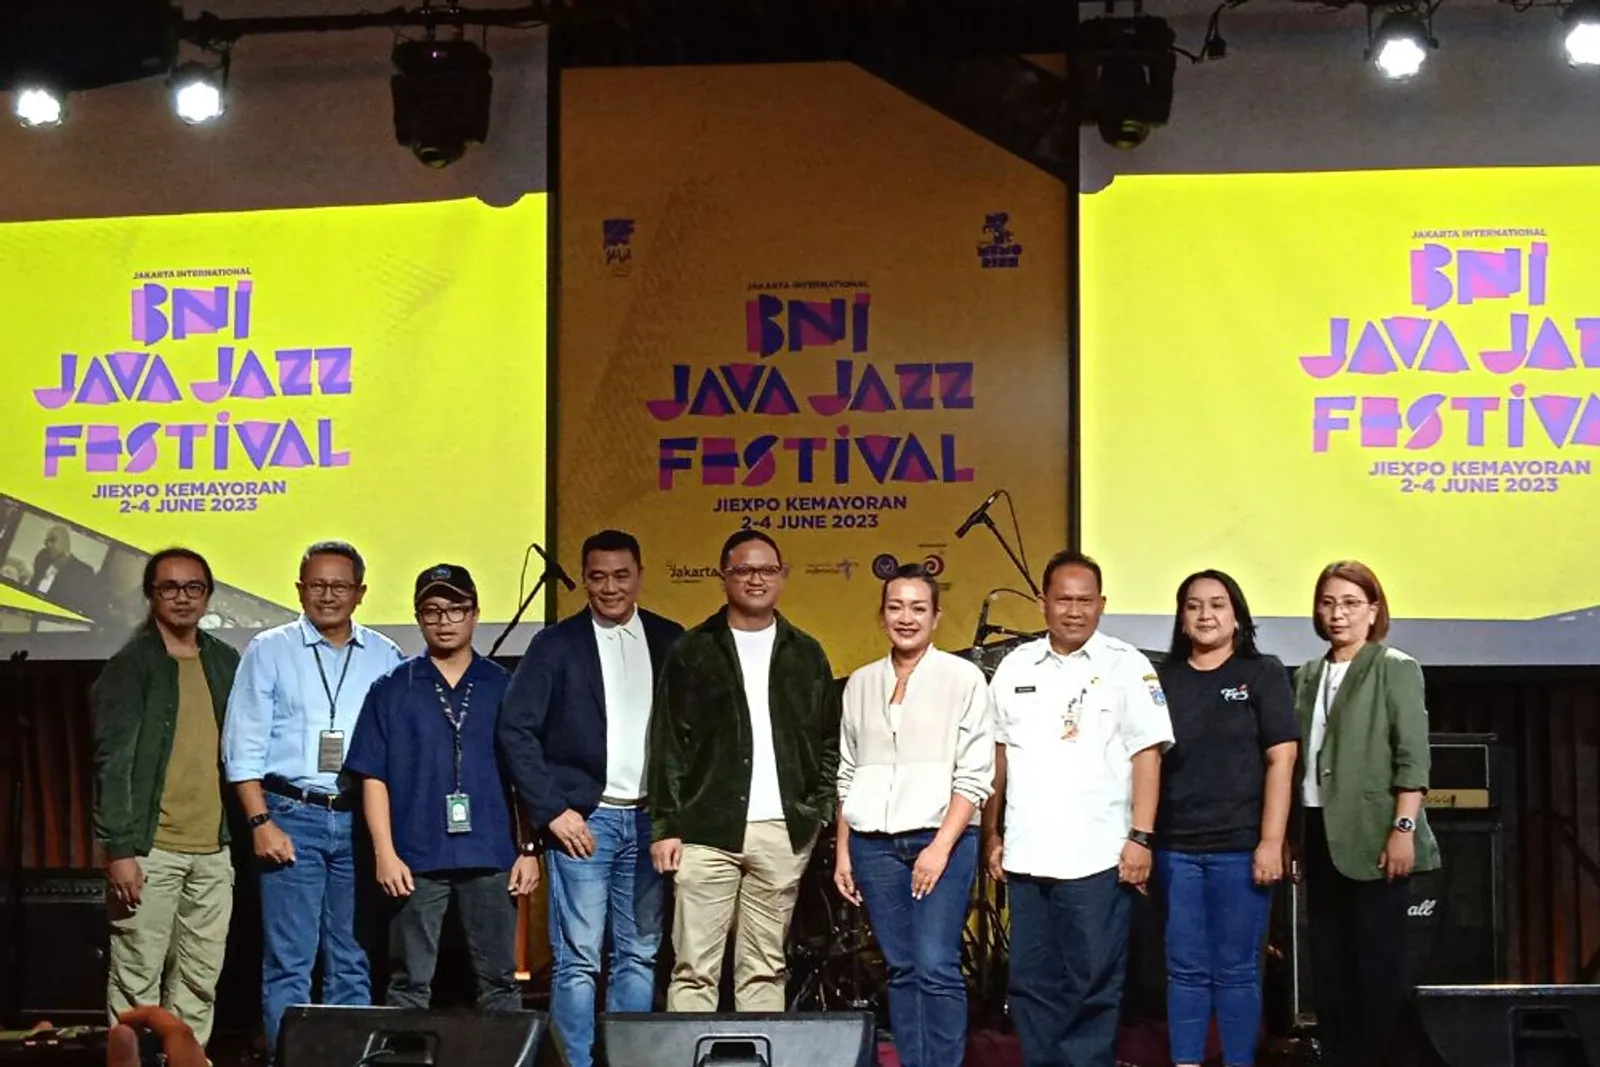 Senandung Memori dengan BNI Java Jazz Festival 2023, Cek Jadwalnya!